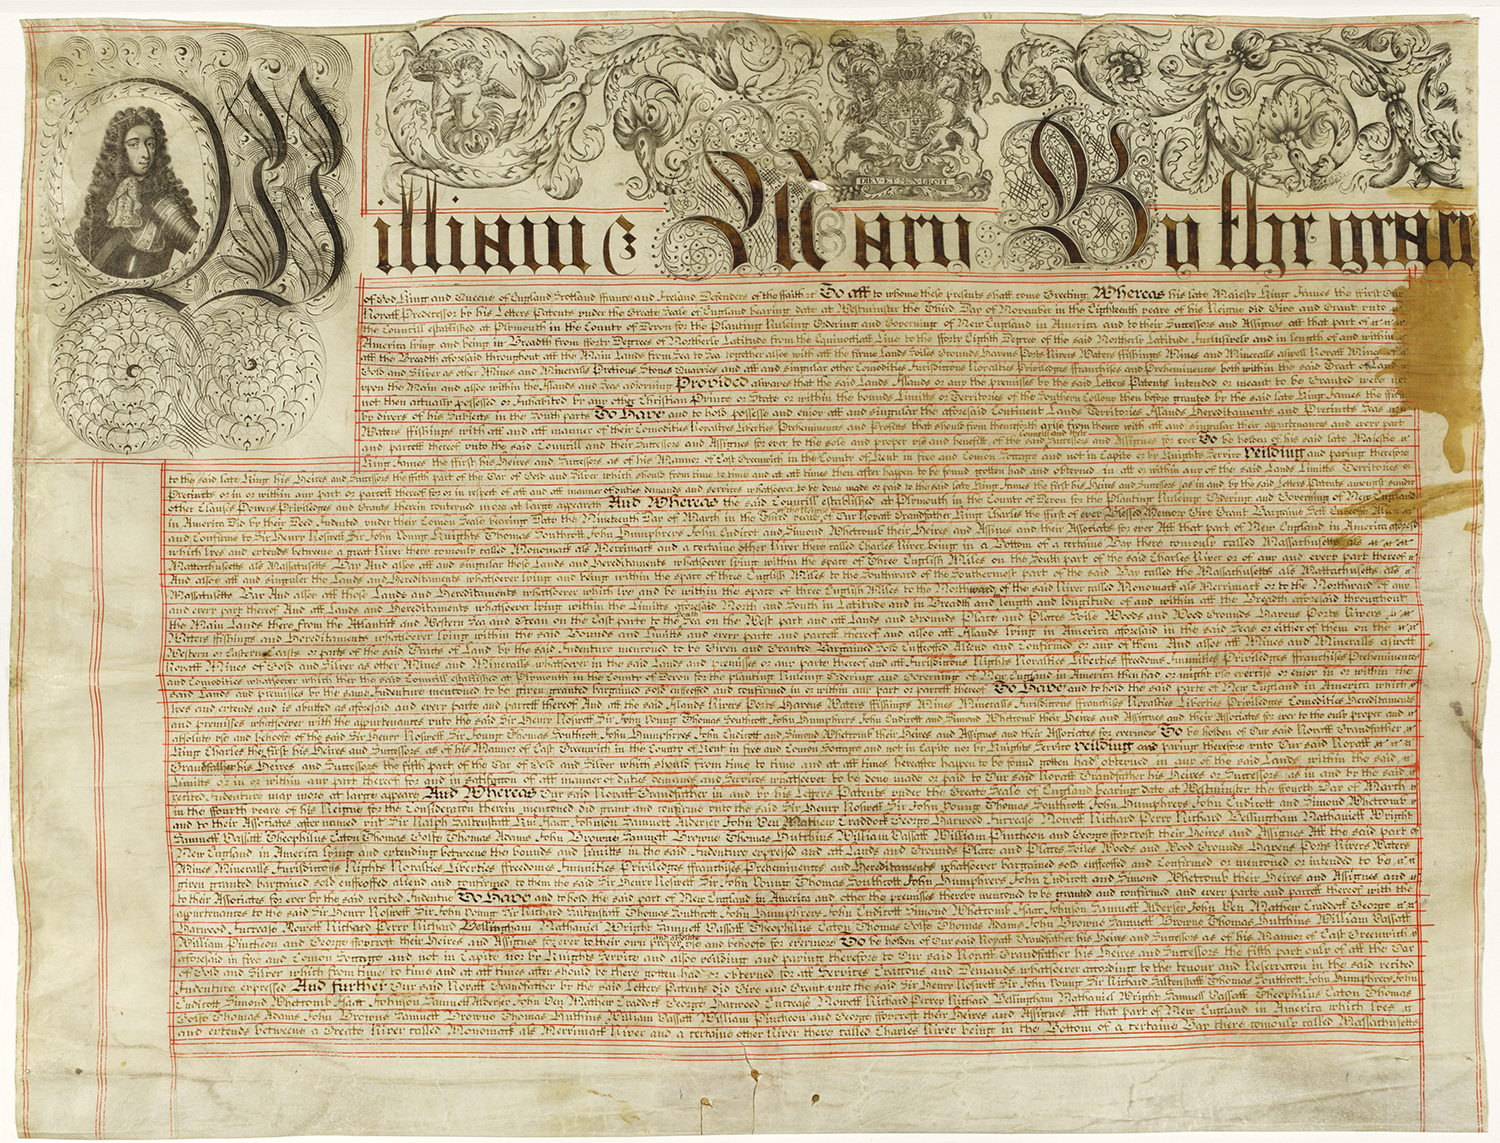 Photo of the 1691 Massachusetts Bay Charter